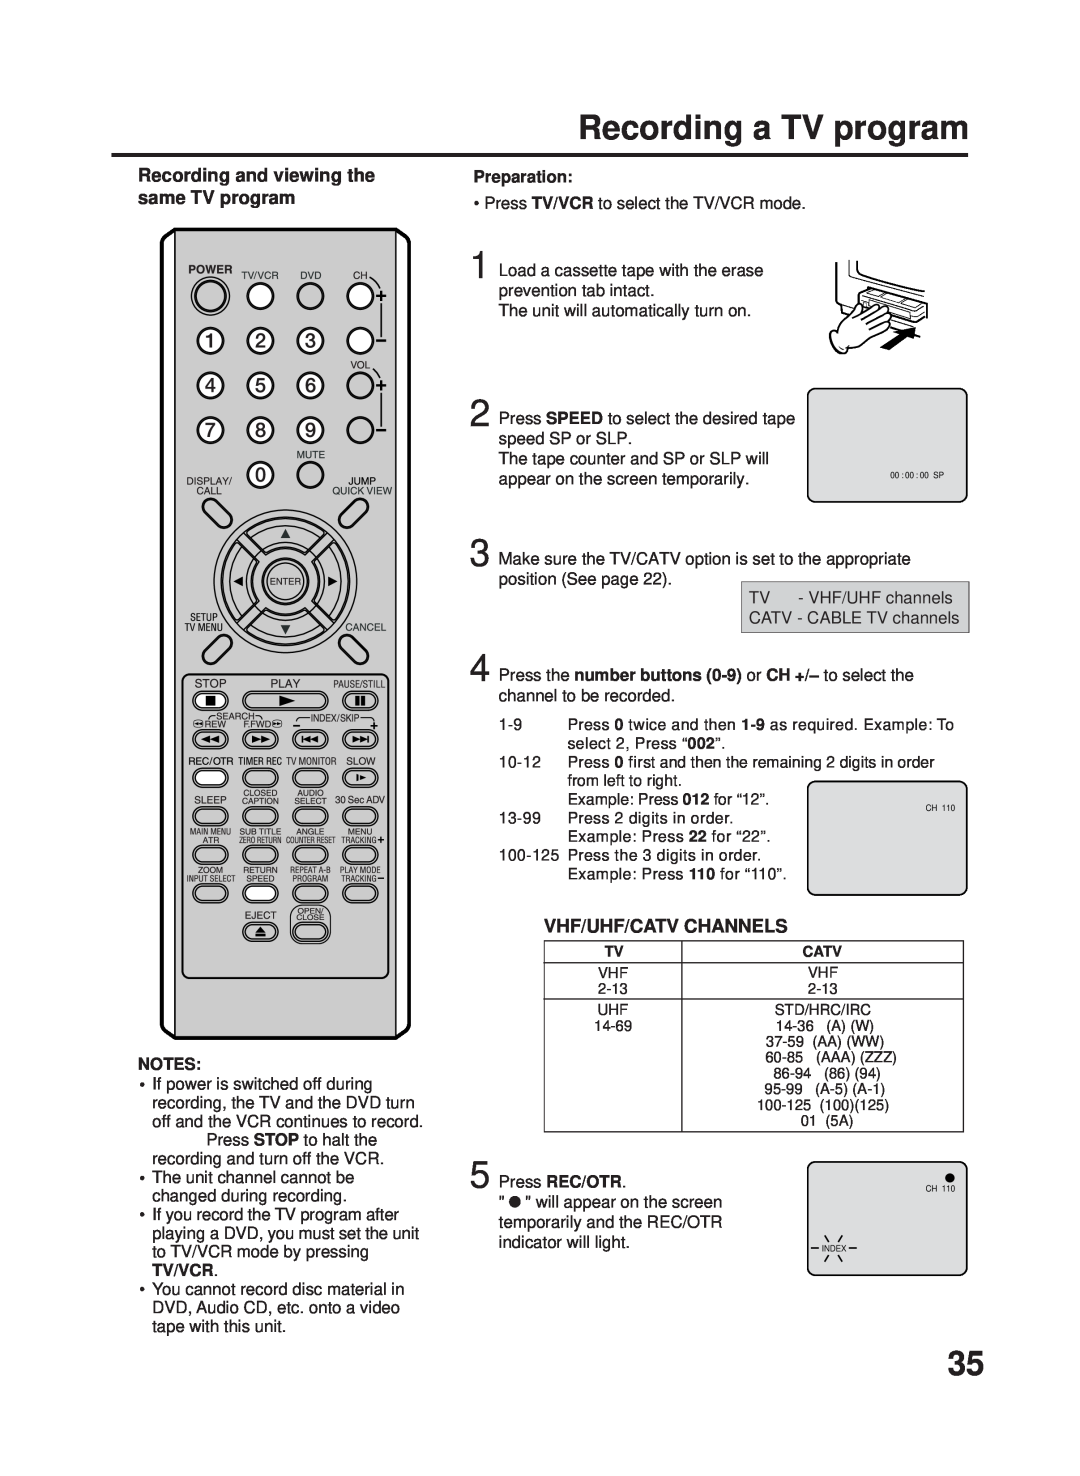 RCA 27F500TDV manual Recording a TV program, Recording and viewing the same TV program, Vhf/Uhf/Catv Channels, Preparation 